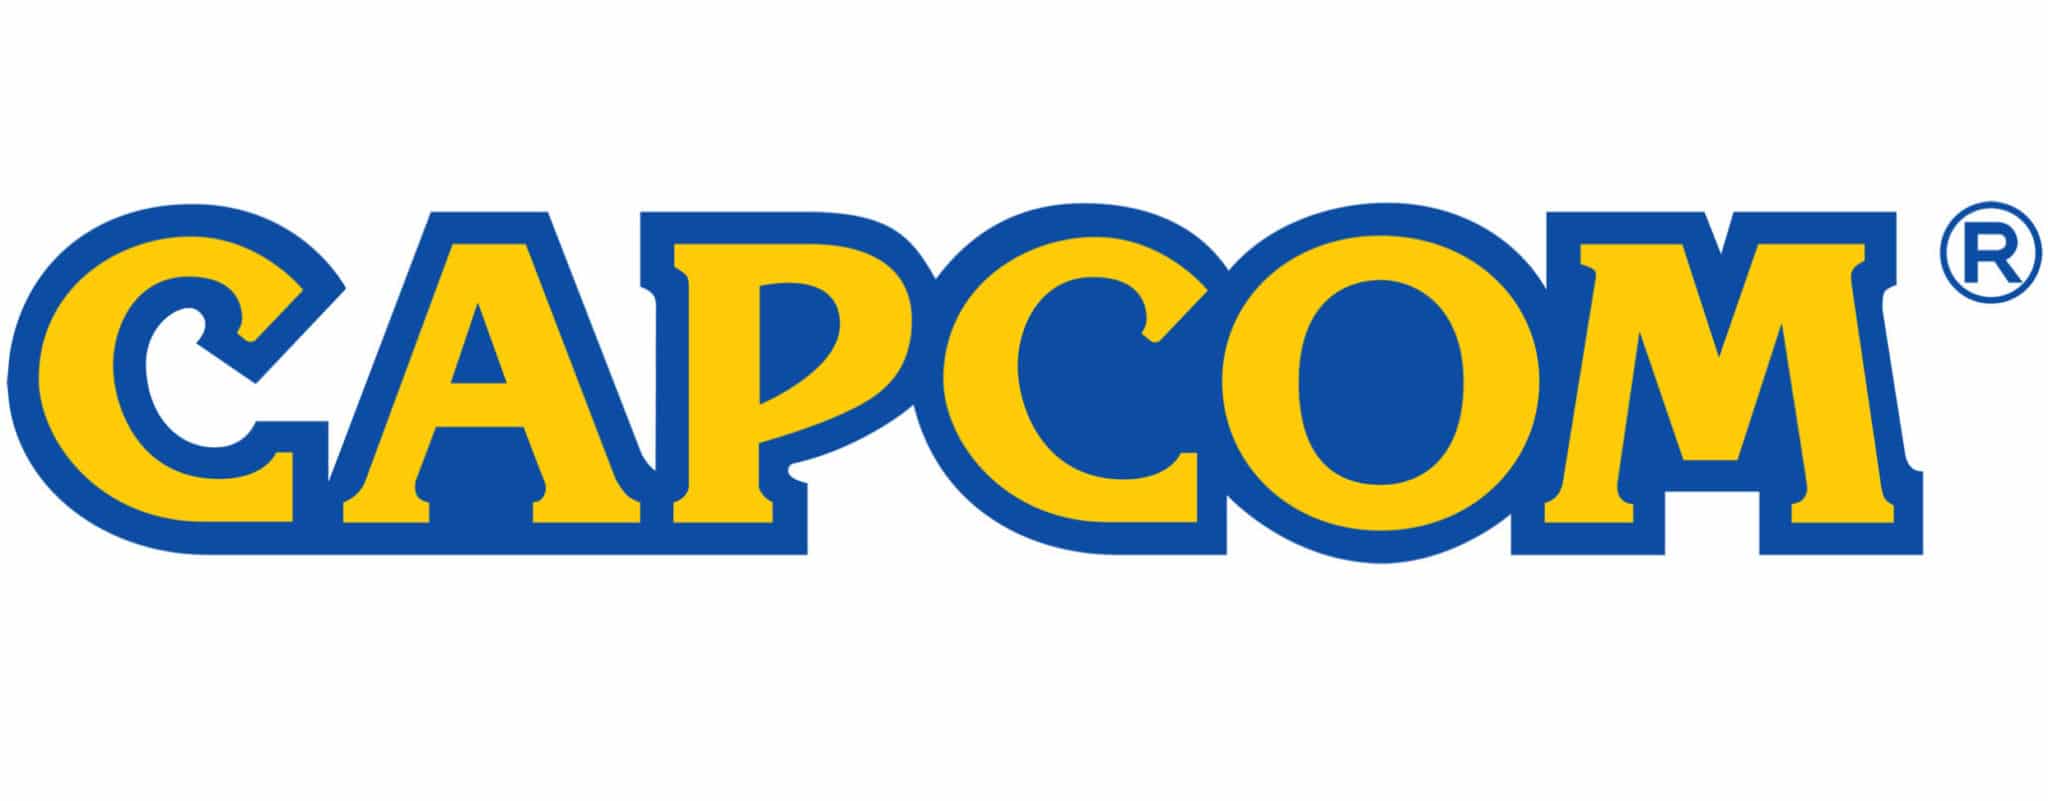 Capcom chiude lo store online negli USA 4